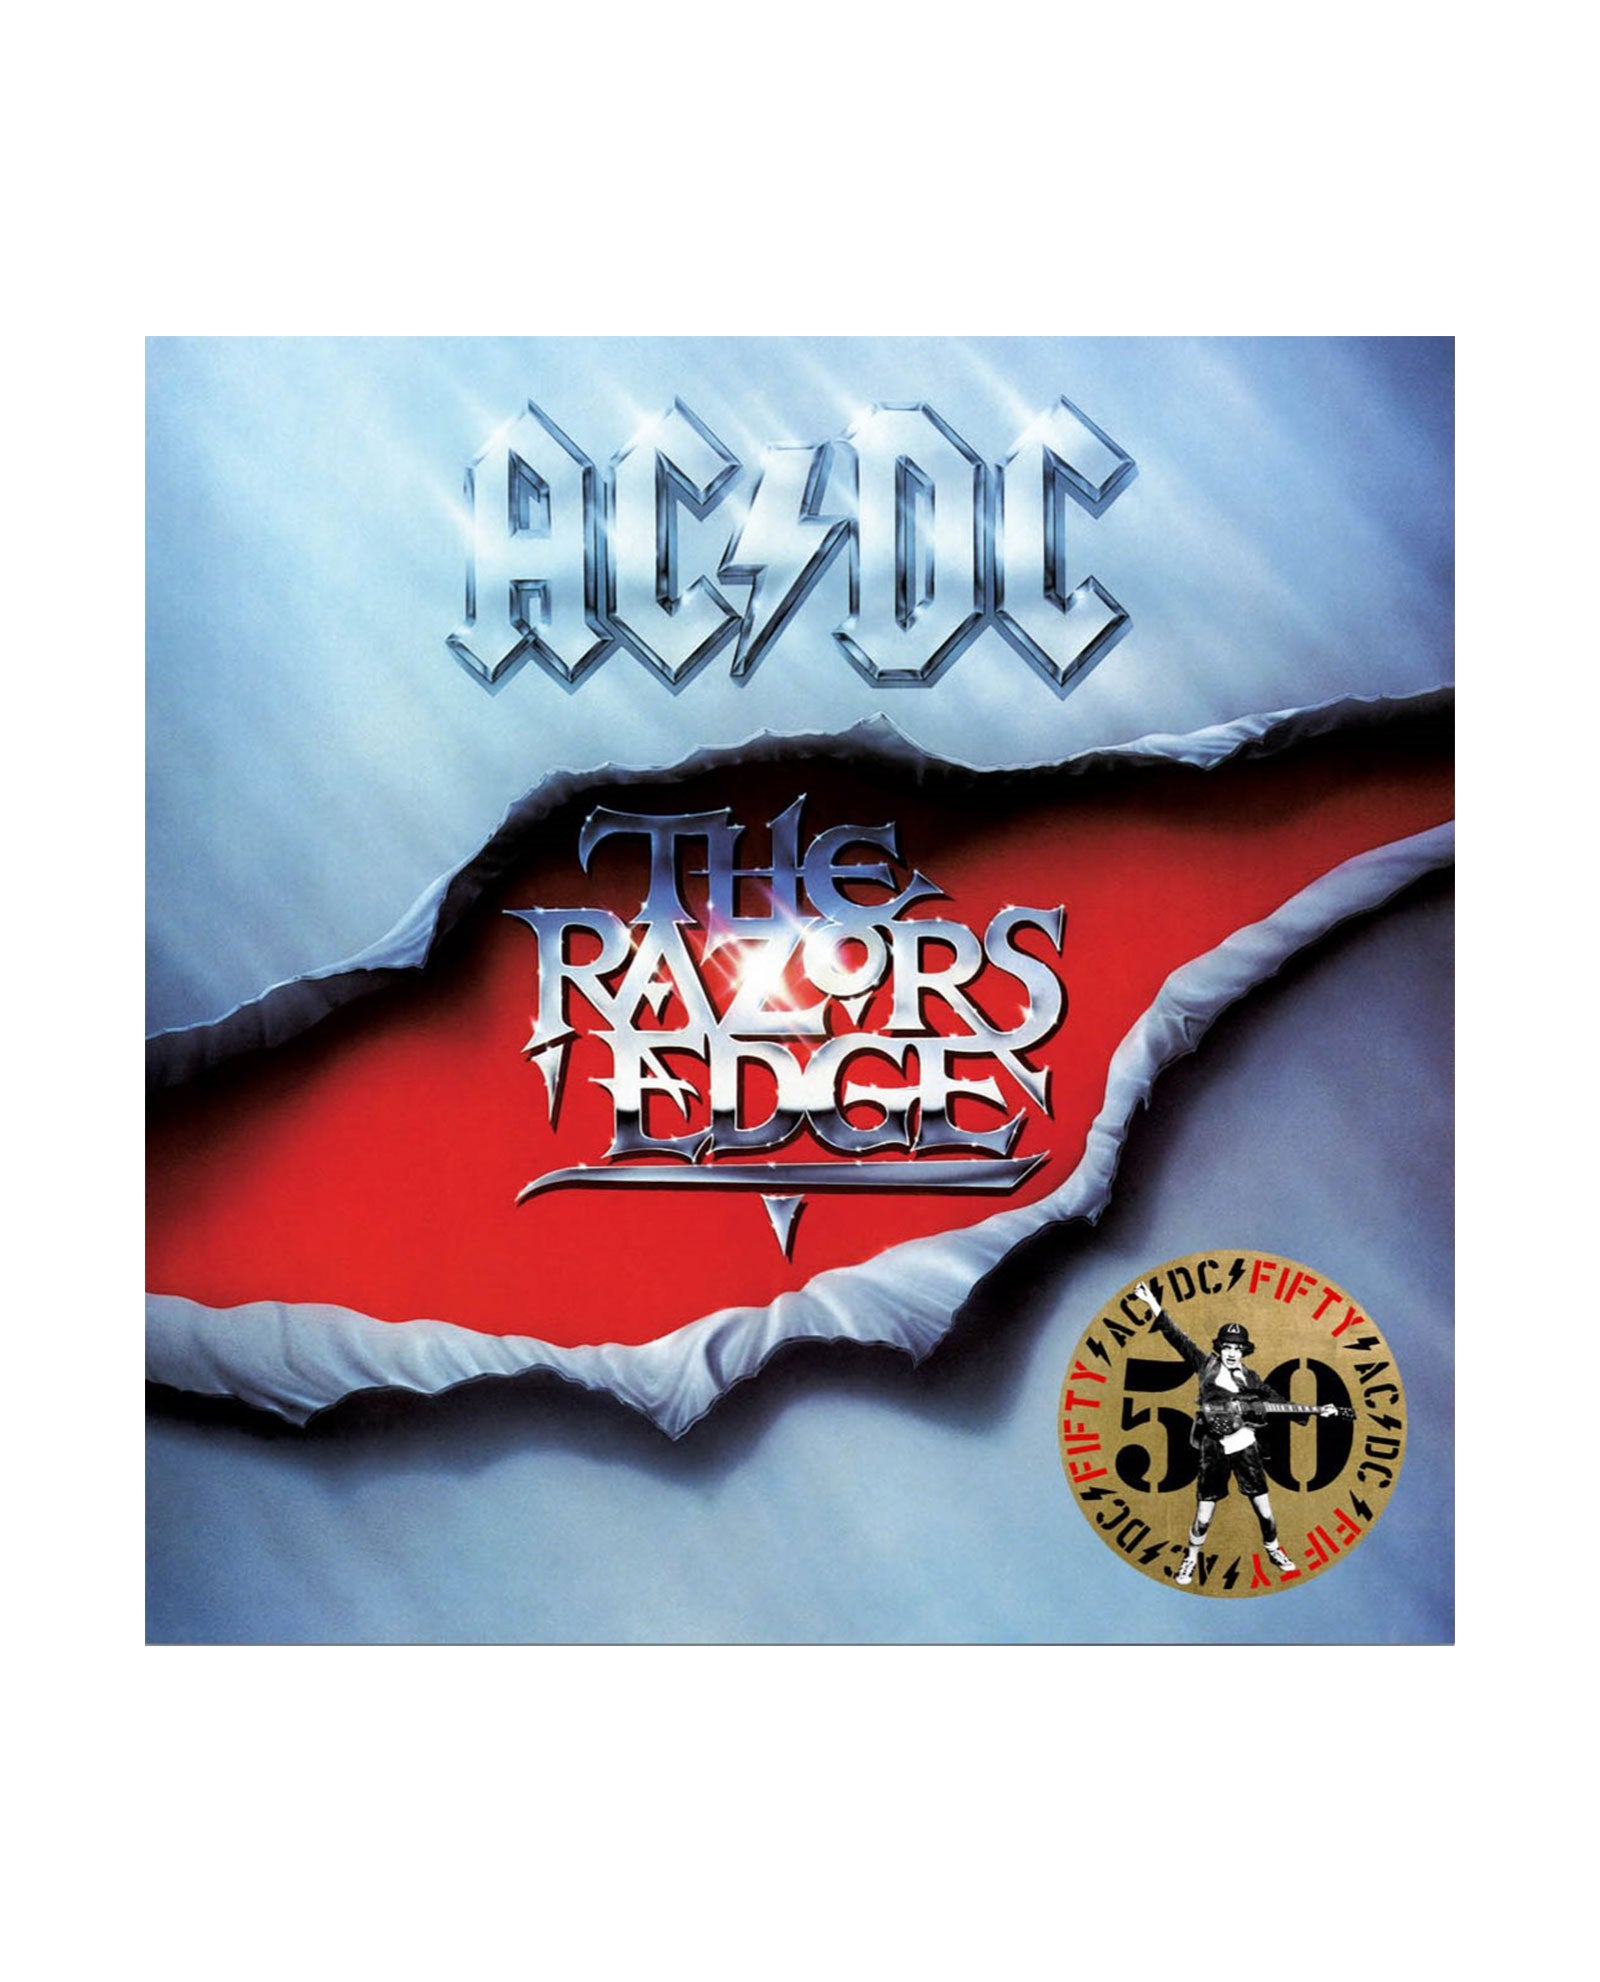 AC/DC - LP Vinilo Dorado "The Razors Edge" Ed. 50 aniversario - D2fy · Rocktud - Rocktud